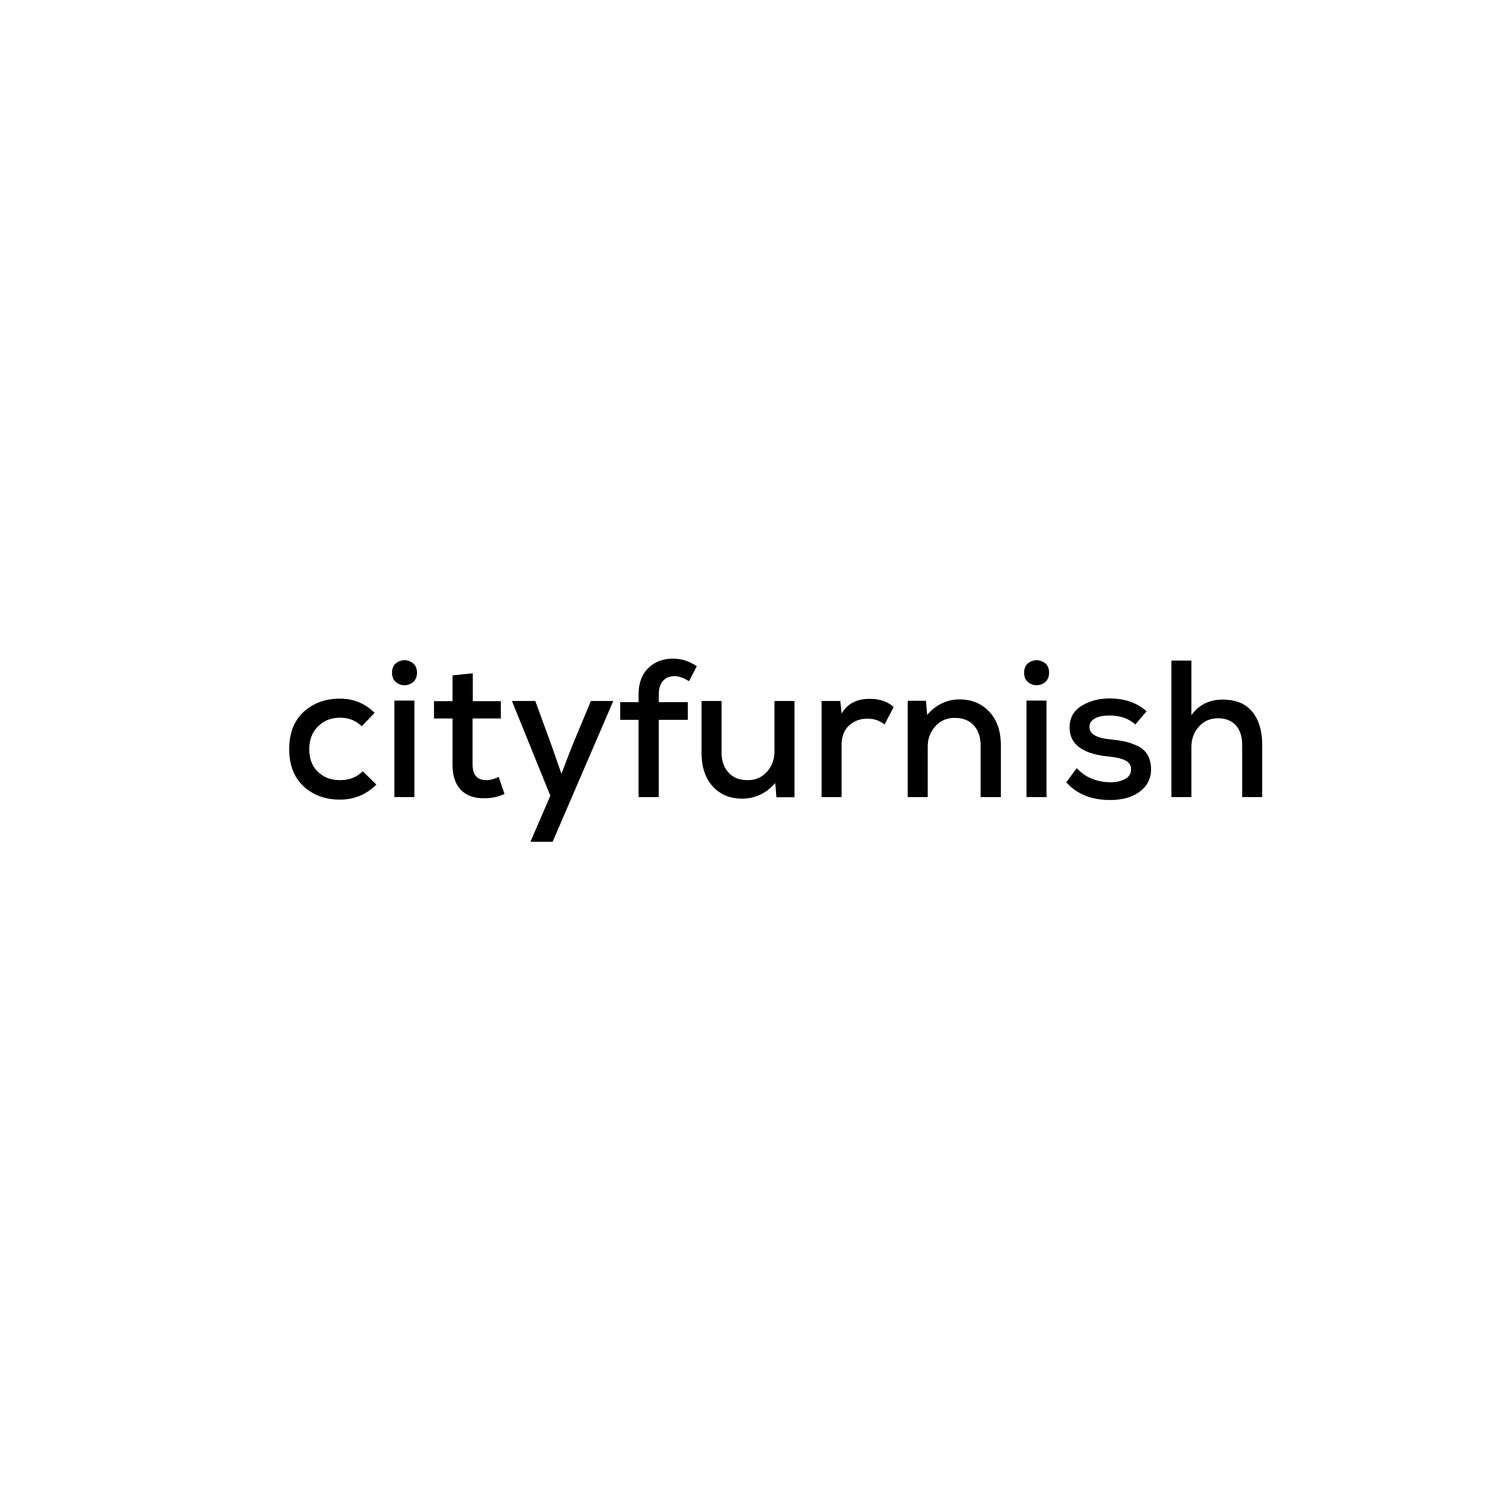 DFS Furniture - Crunchbase Company Profile & Funding